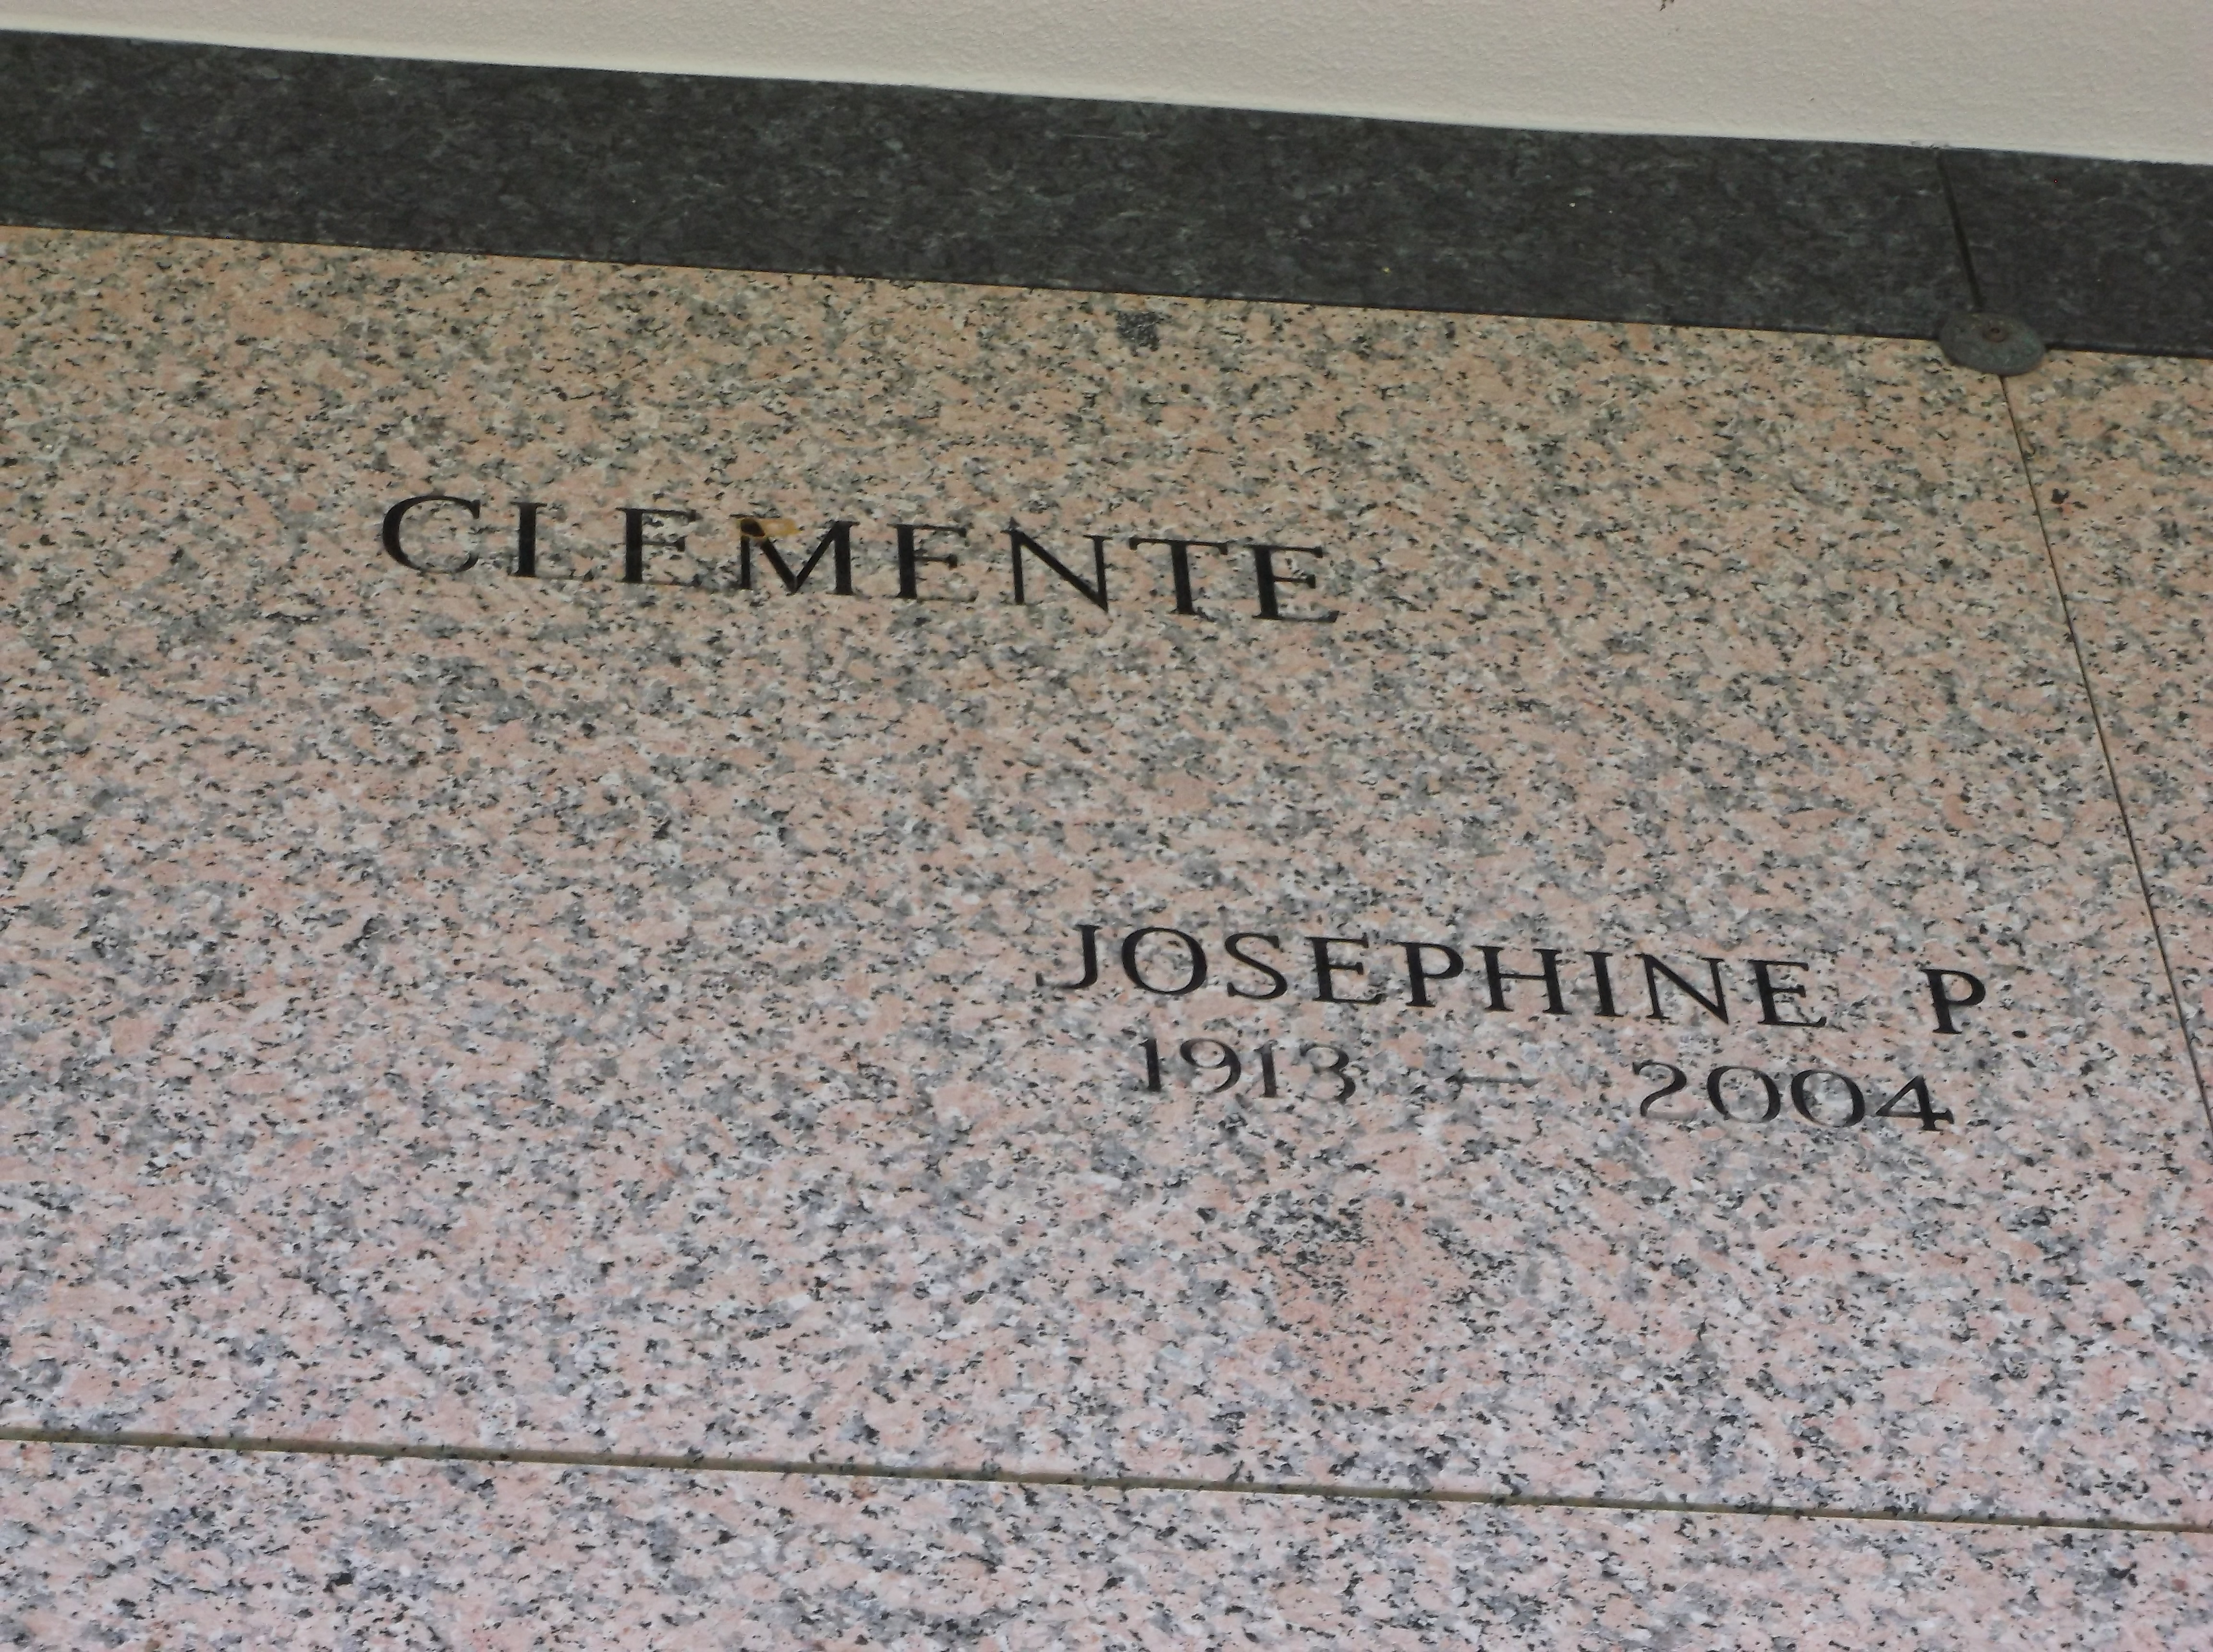 Josephine P Clemente